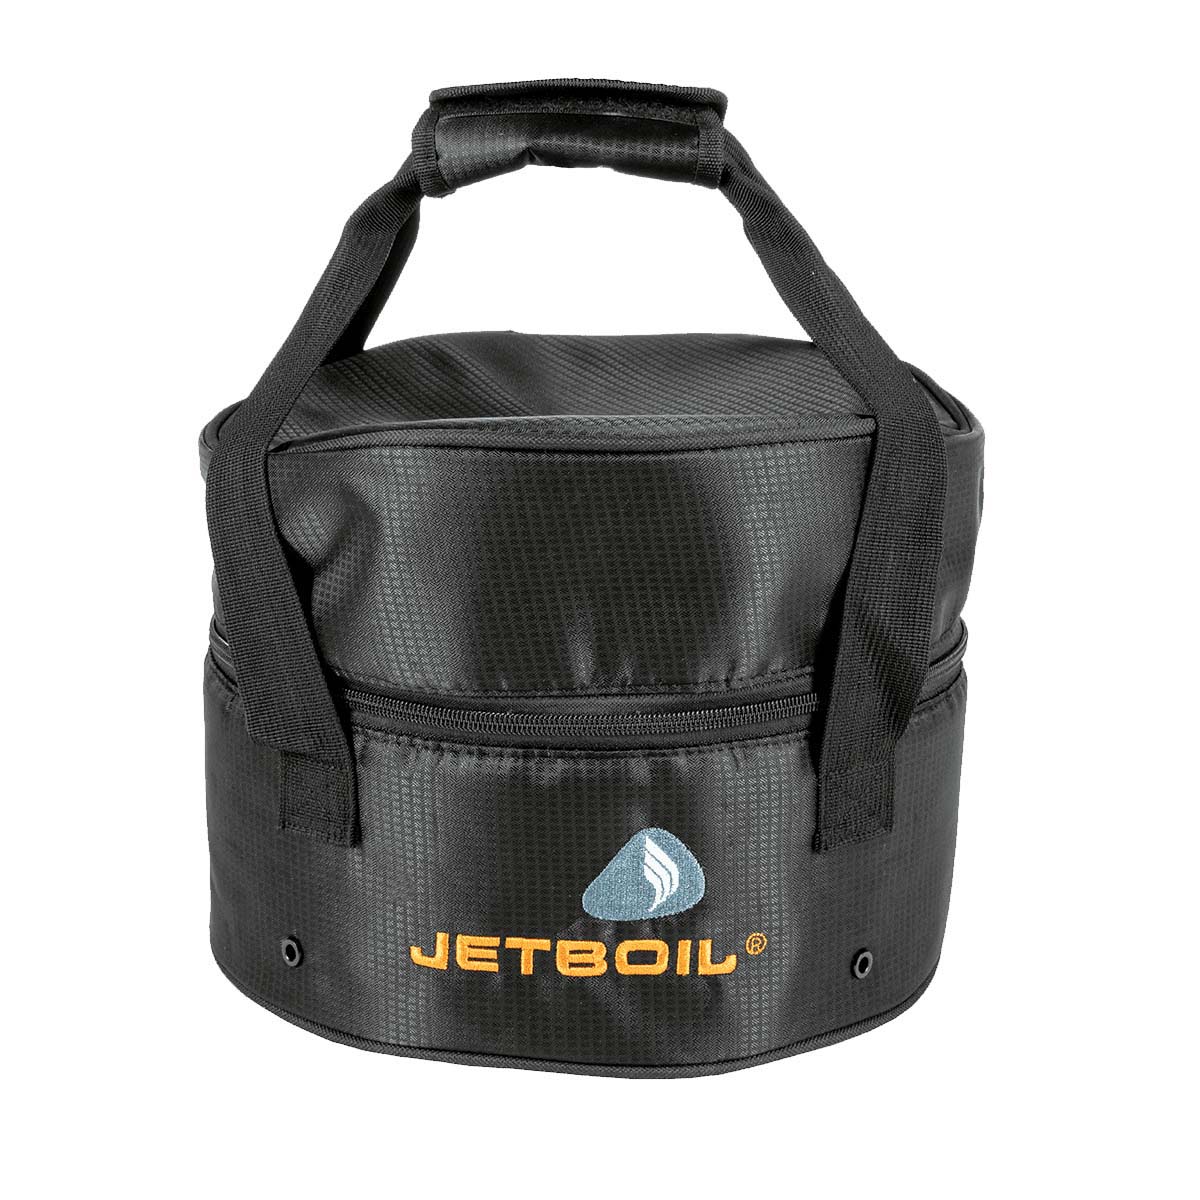 Jetboil Genesis System Carry Bag